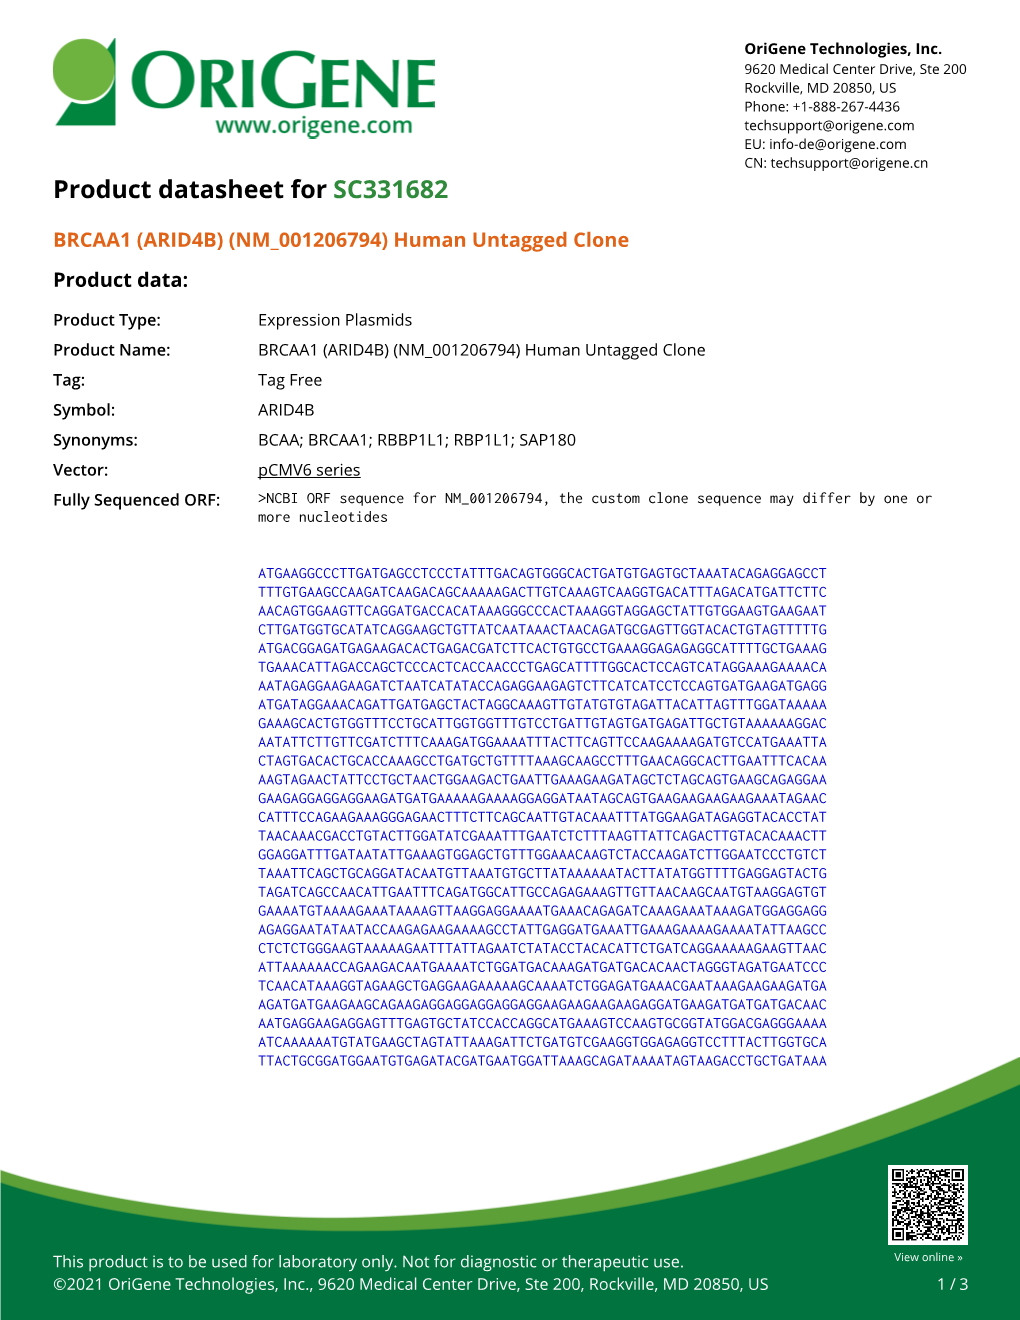 BRCAA1 (ARID4B) (NM 001206794) Human Untagged Clone Product Data